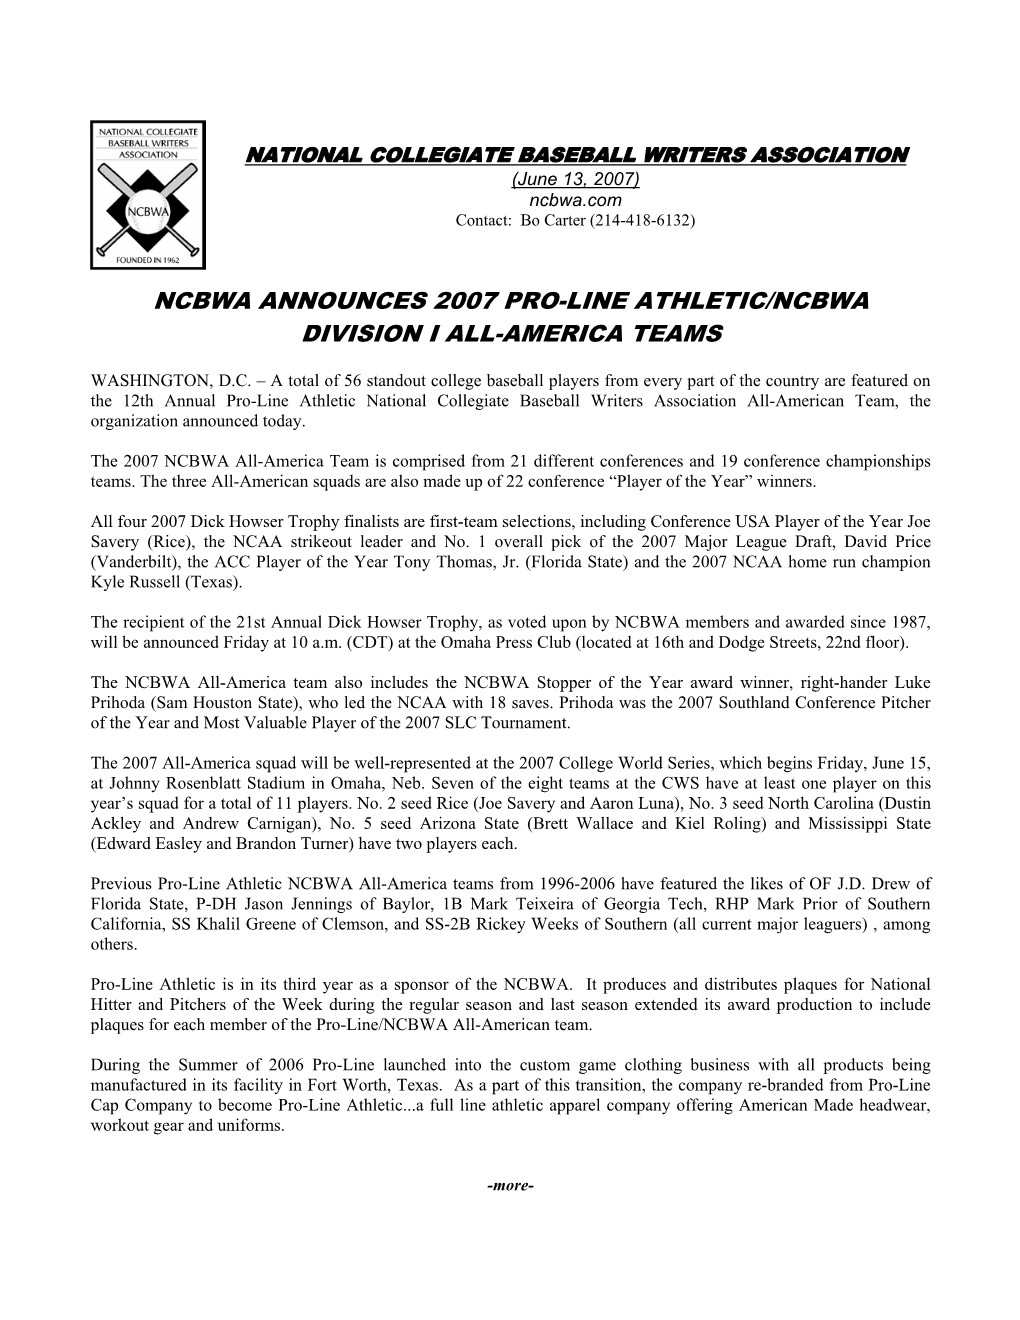 Ncbwa Announces 2007 Pro-Line Athletic/Ncbwa Division I All-America Teams